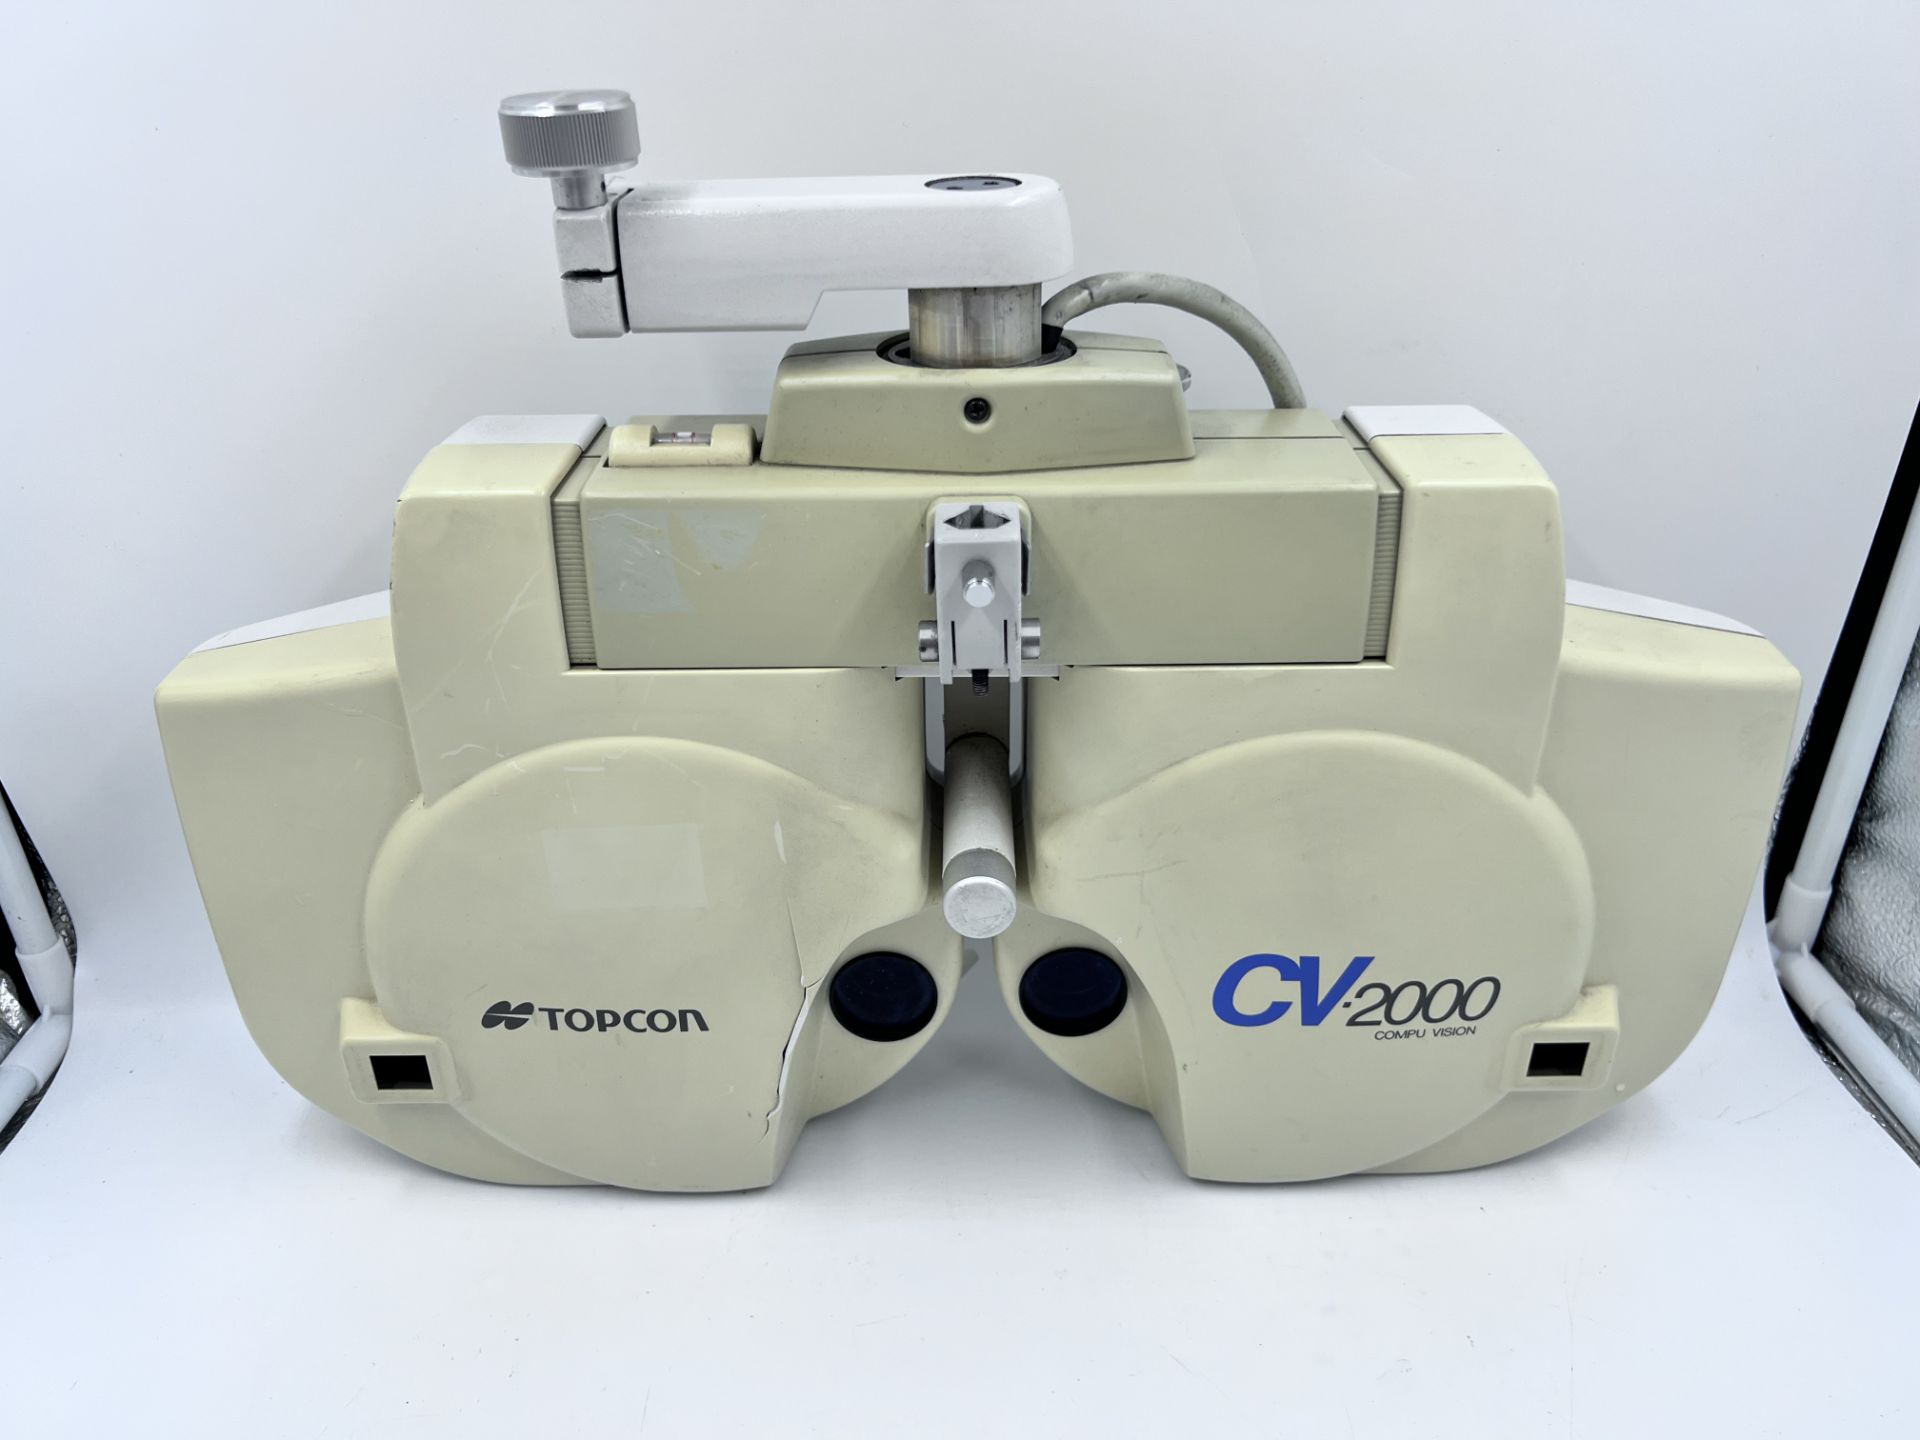 Topcon CV-2000 Compu Vision System Digital Phoroptor